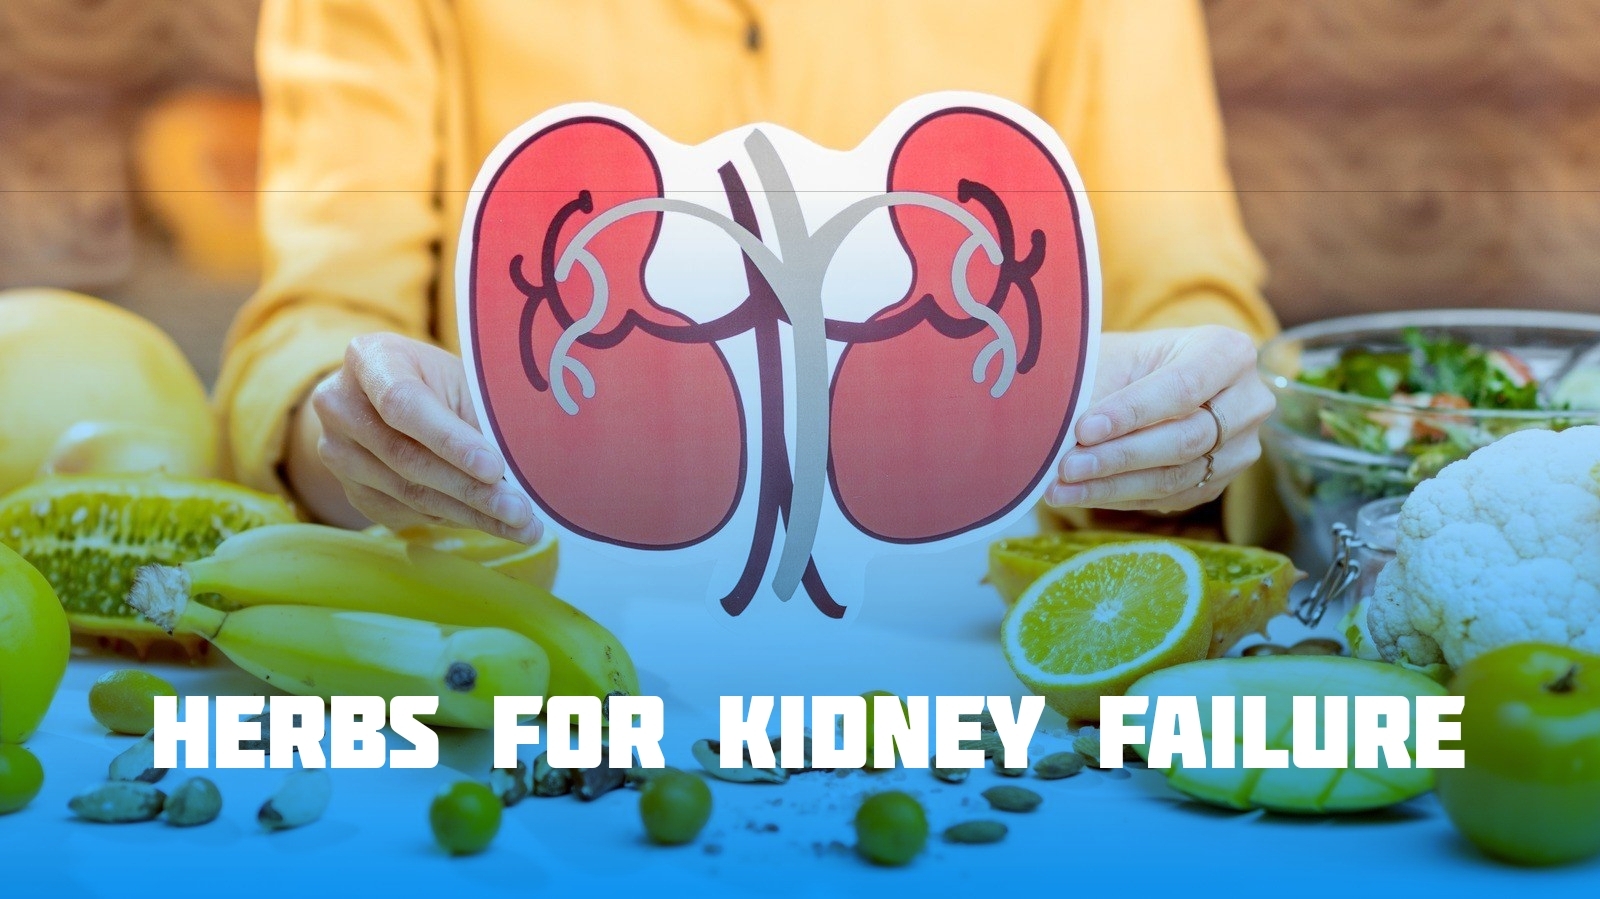 Herbs for kidney failure